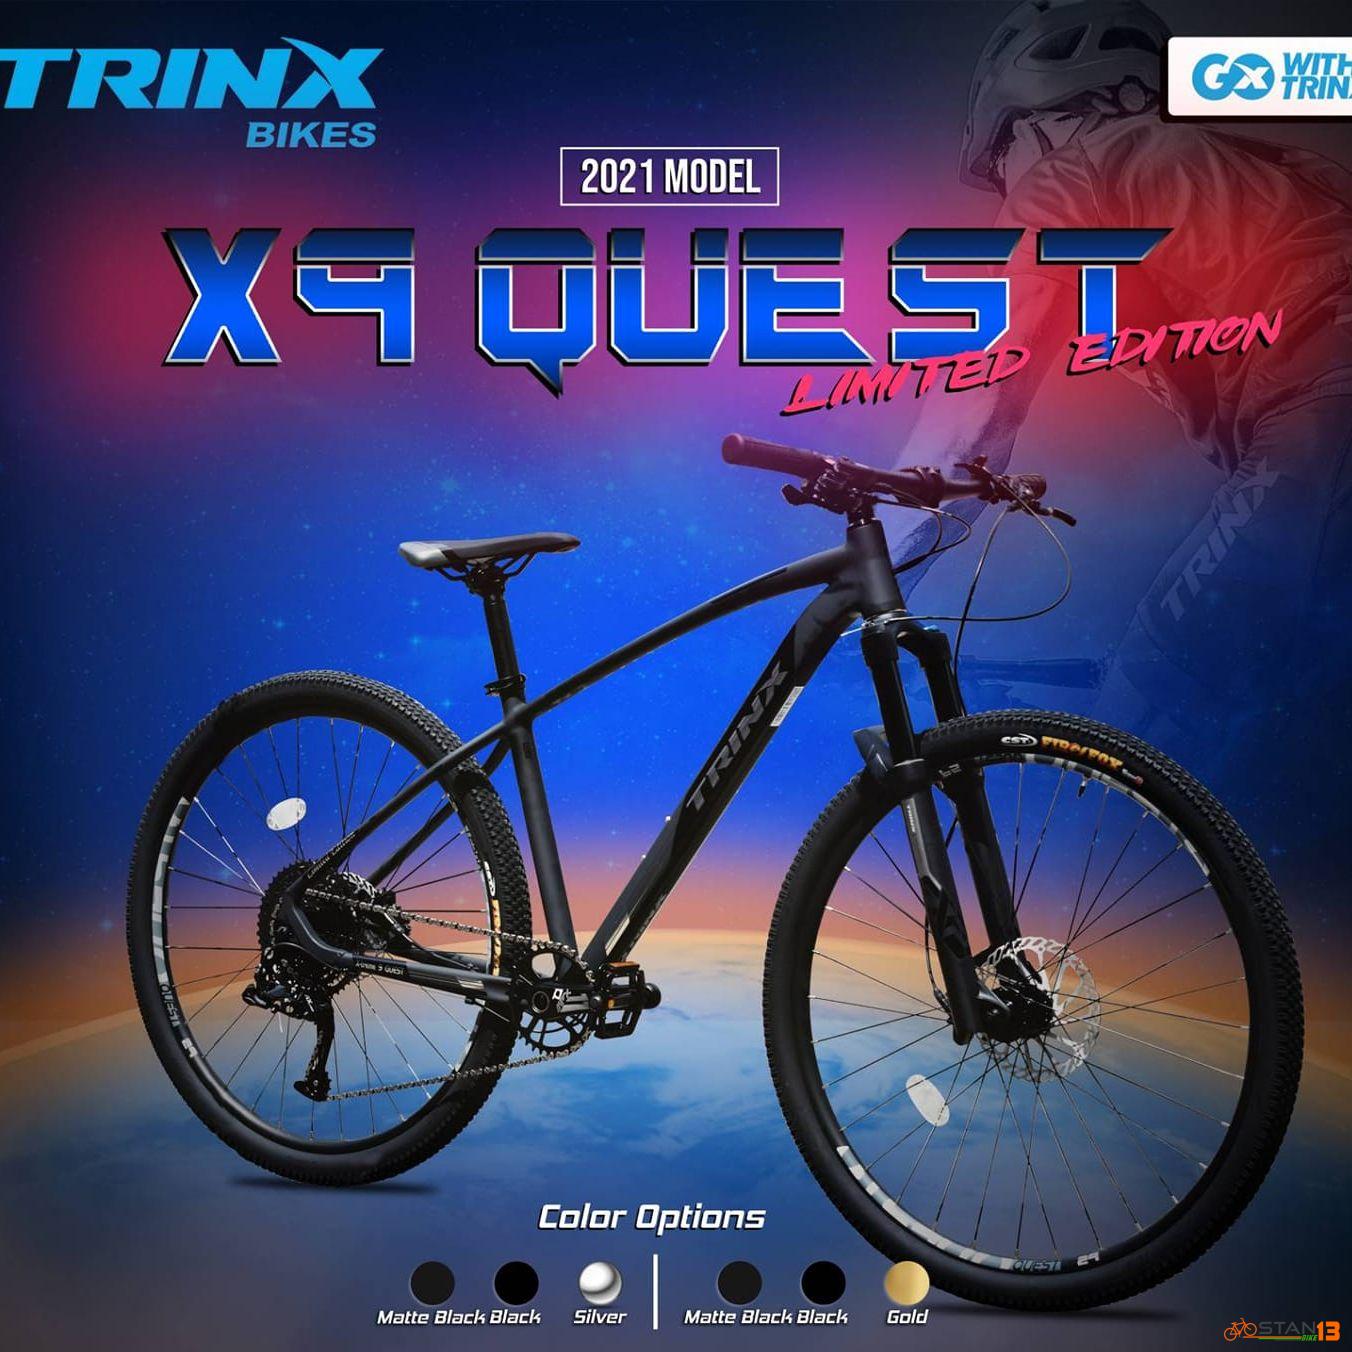 Trinx X9 Quest 29er 12 Speed Ltwoo AX Air Fork Suspension